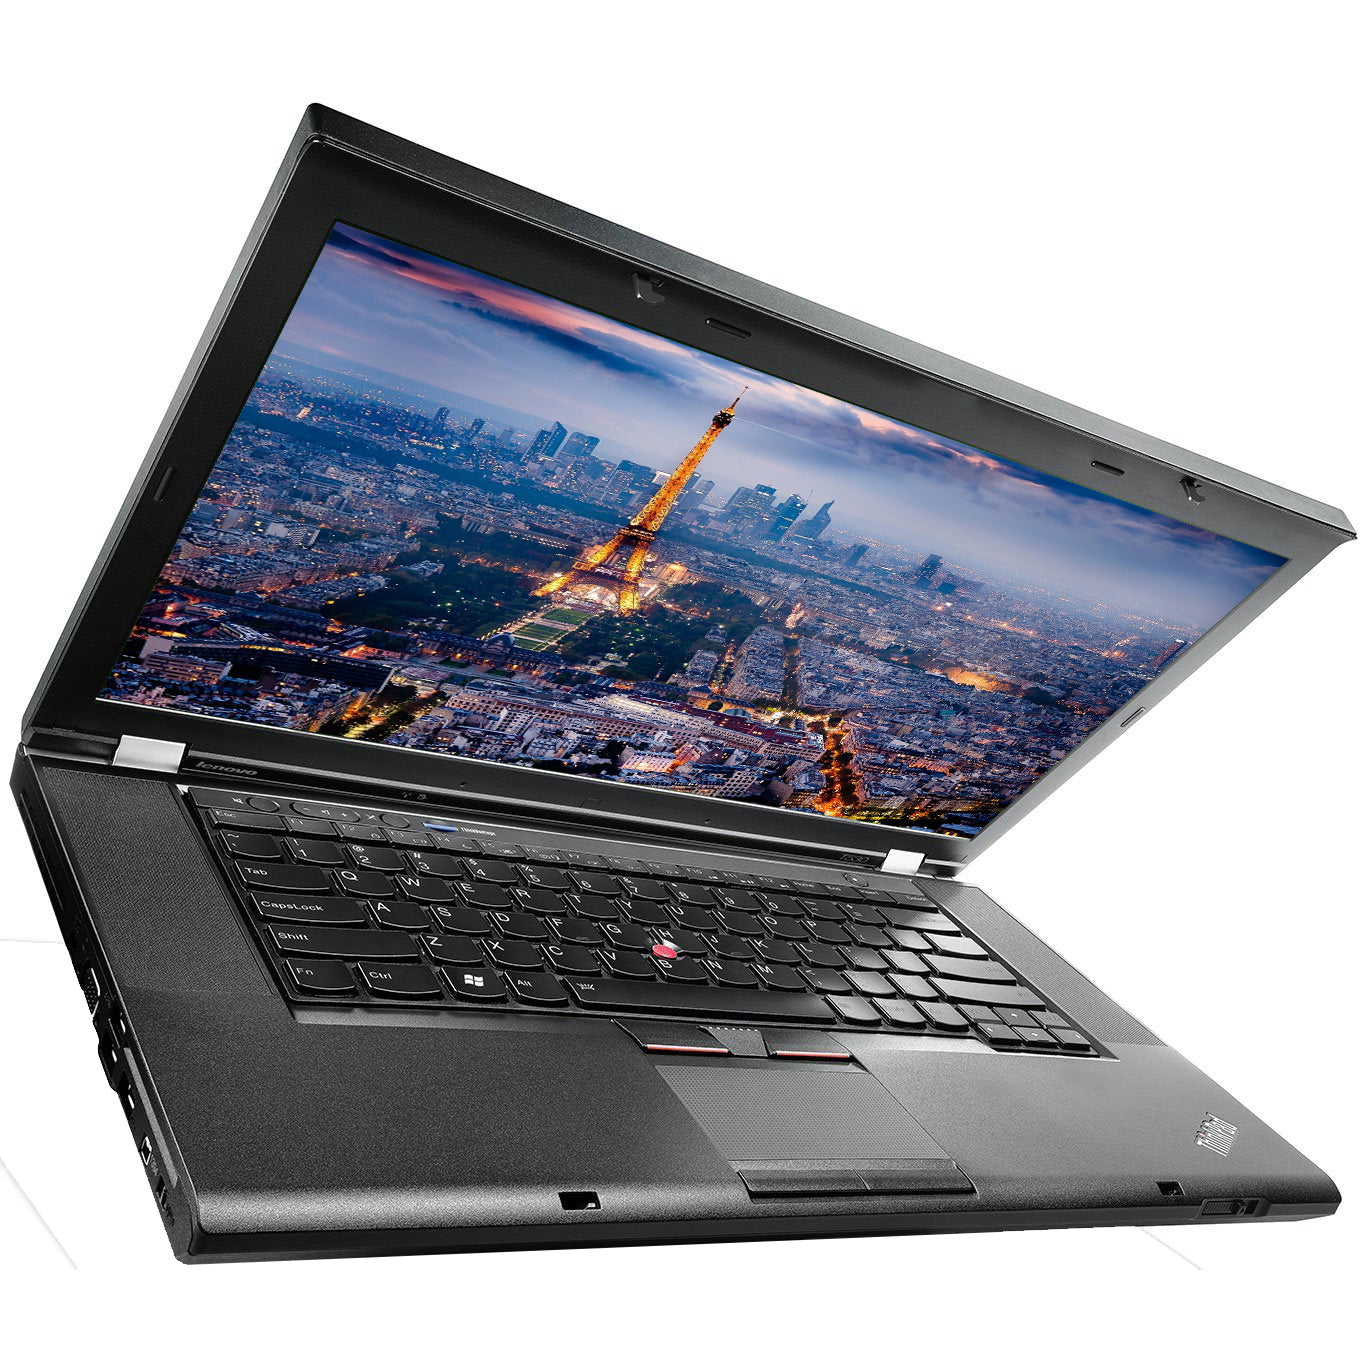 Lenovo ThinkPad T530 15.6" Laptop